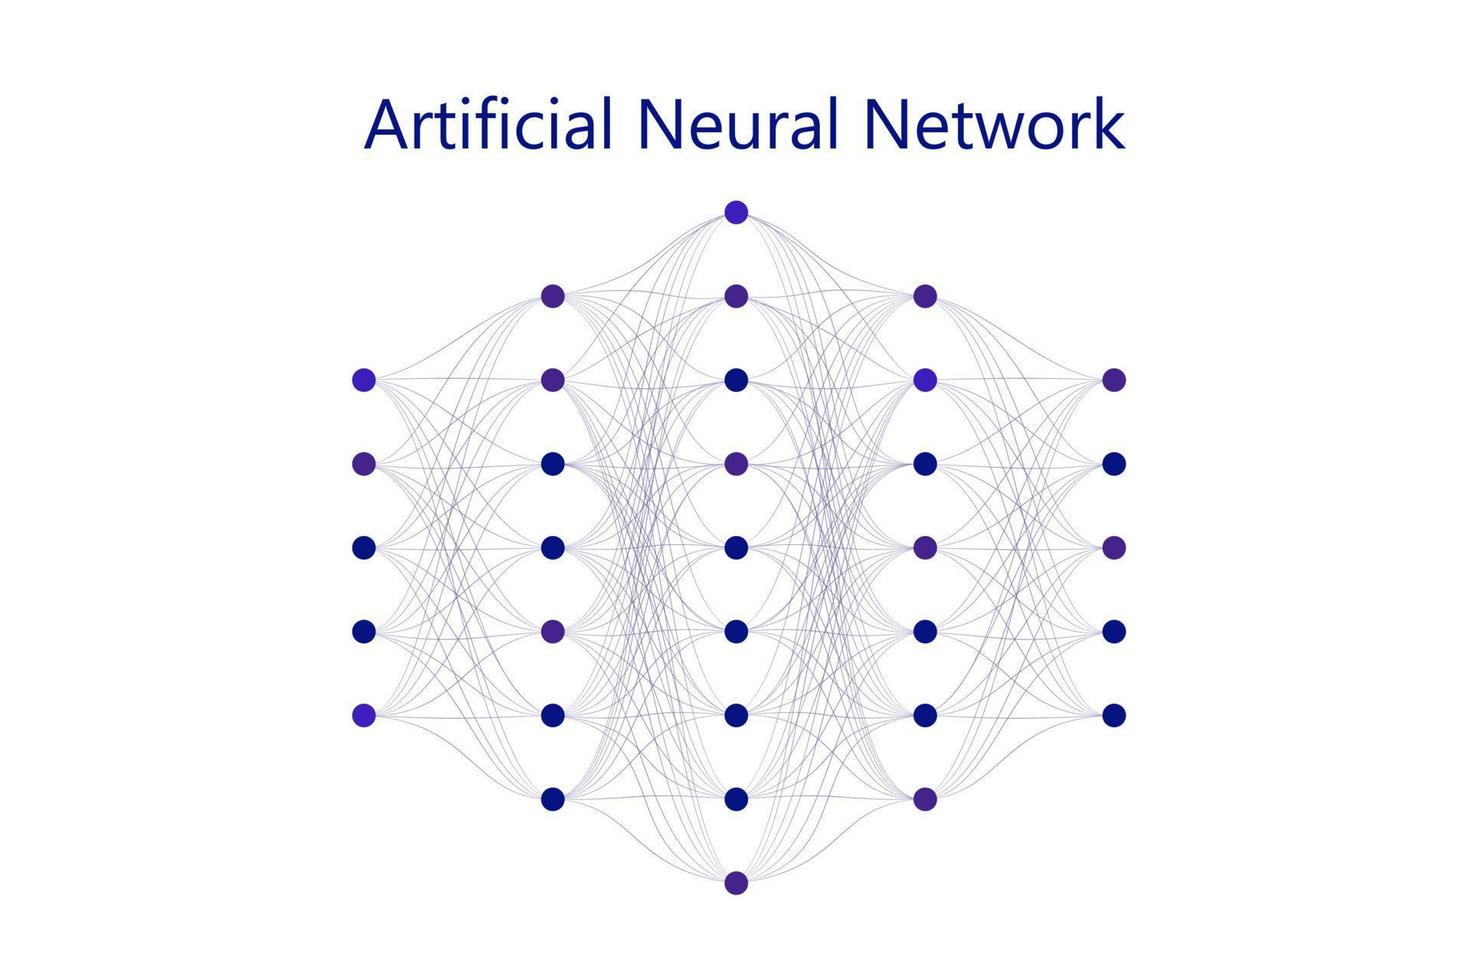 Neural network model vector